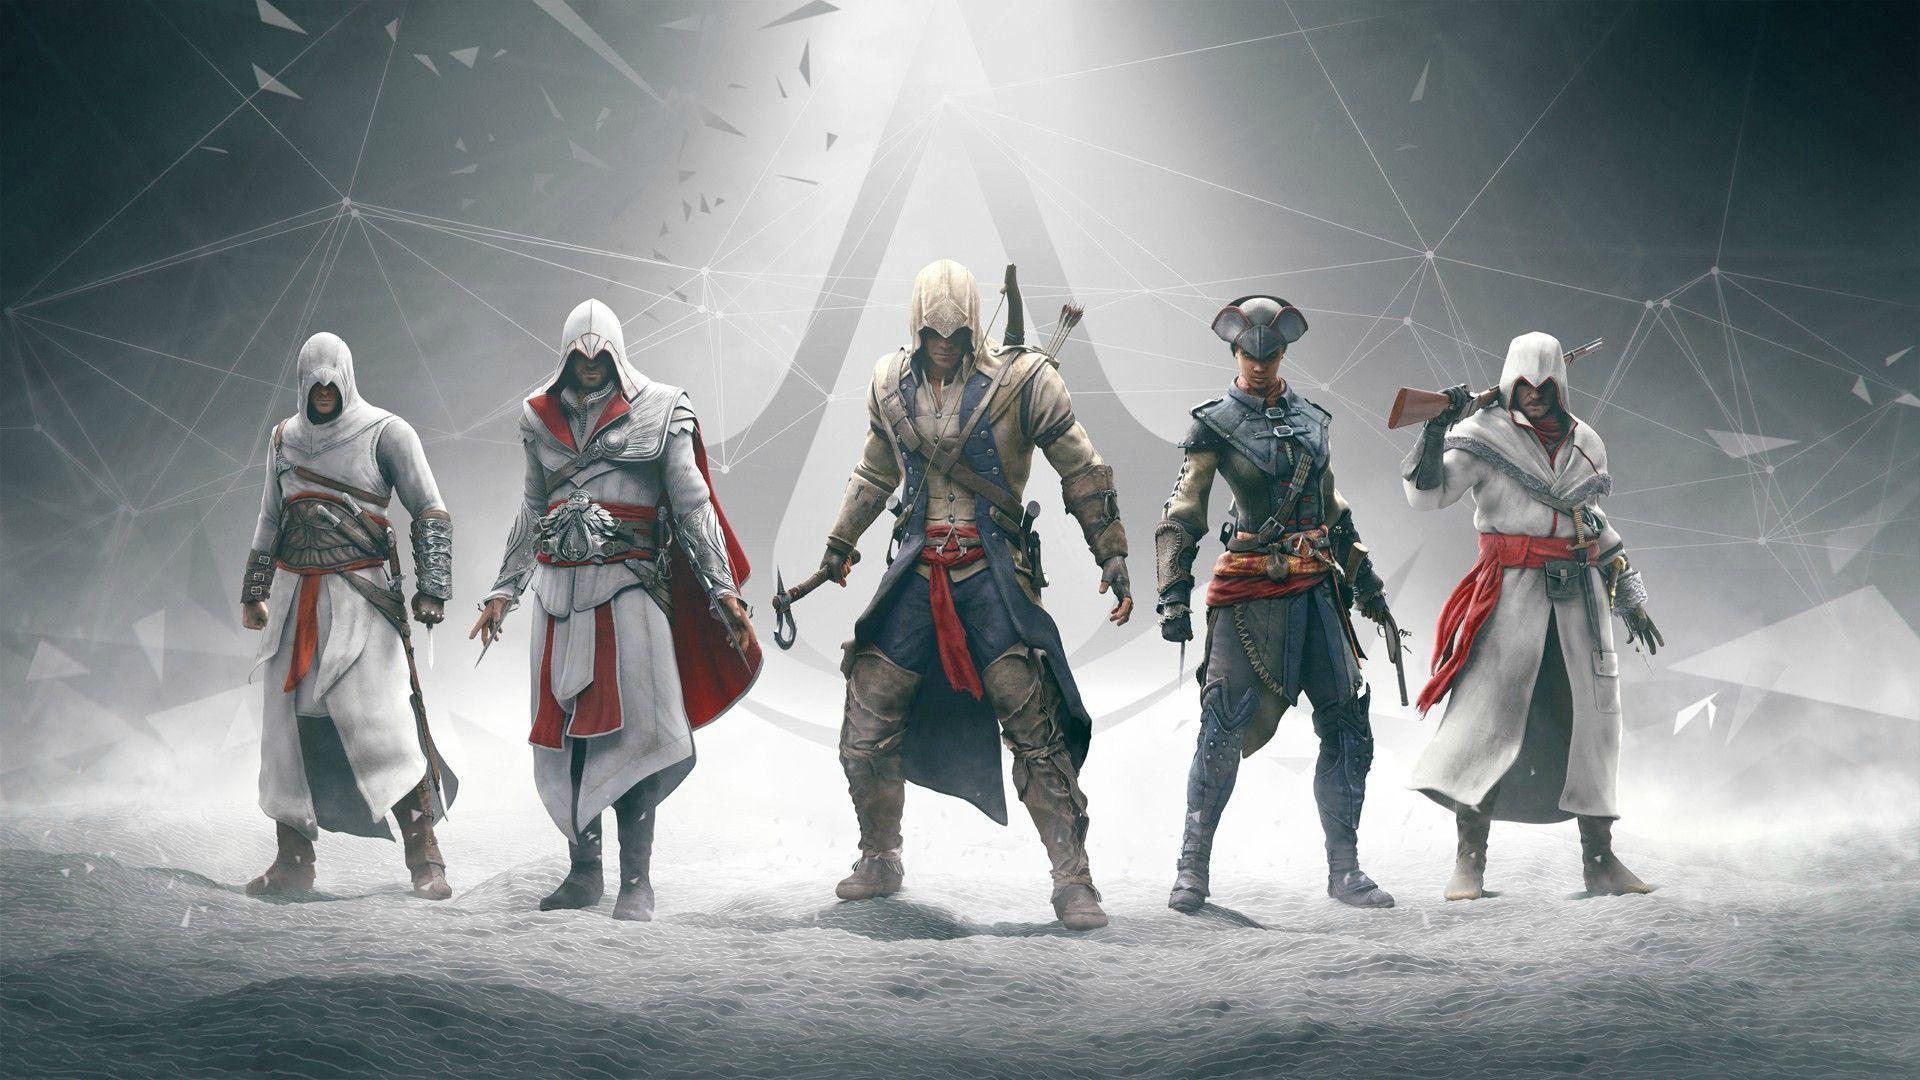 Assassin's Creed HD Wallpaper[1920x1080]. Beautiful Wallpaper